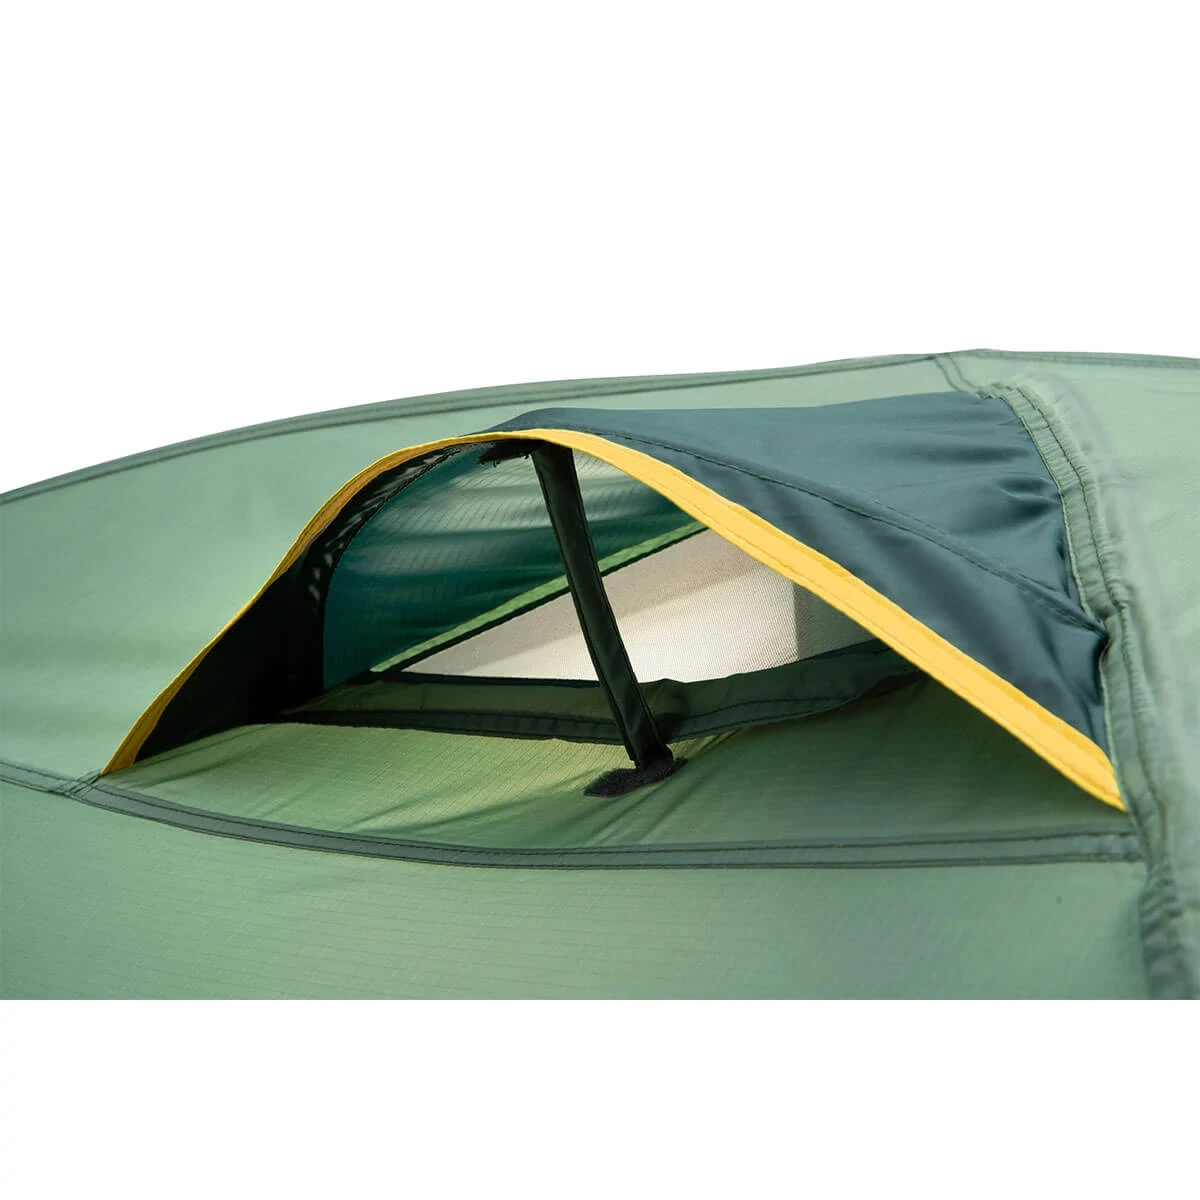 Eureka! El Capitan 4+ Outfitter Tent vent opened